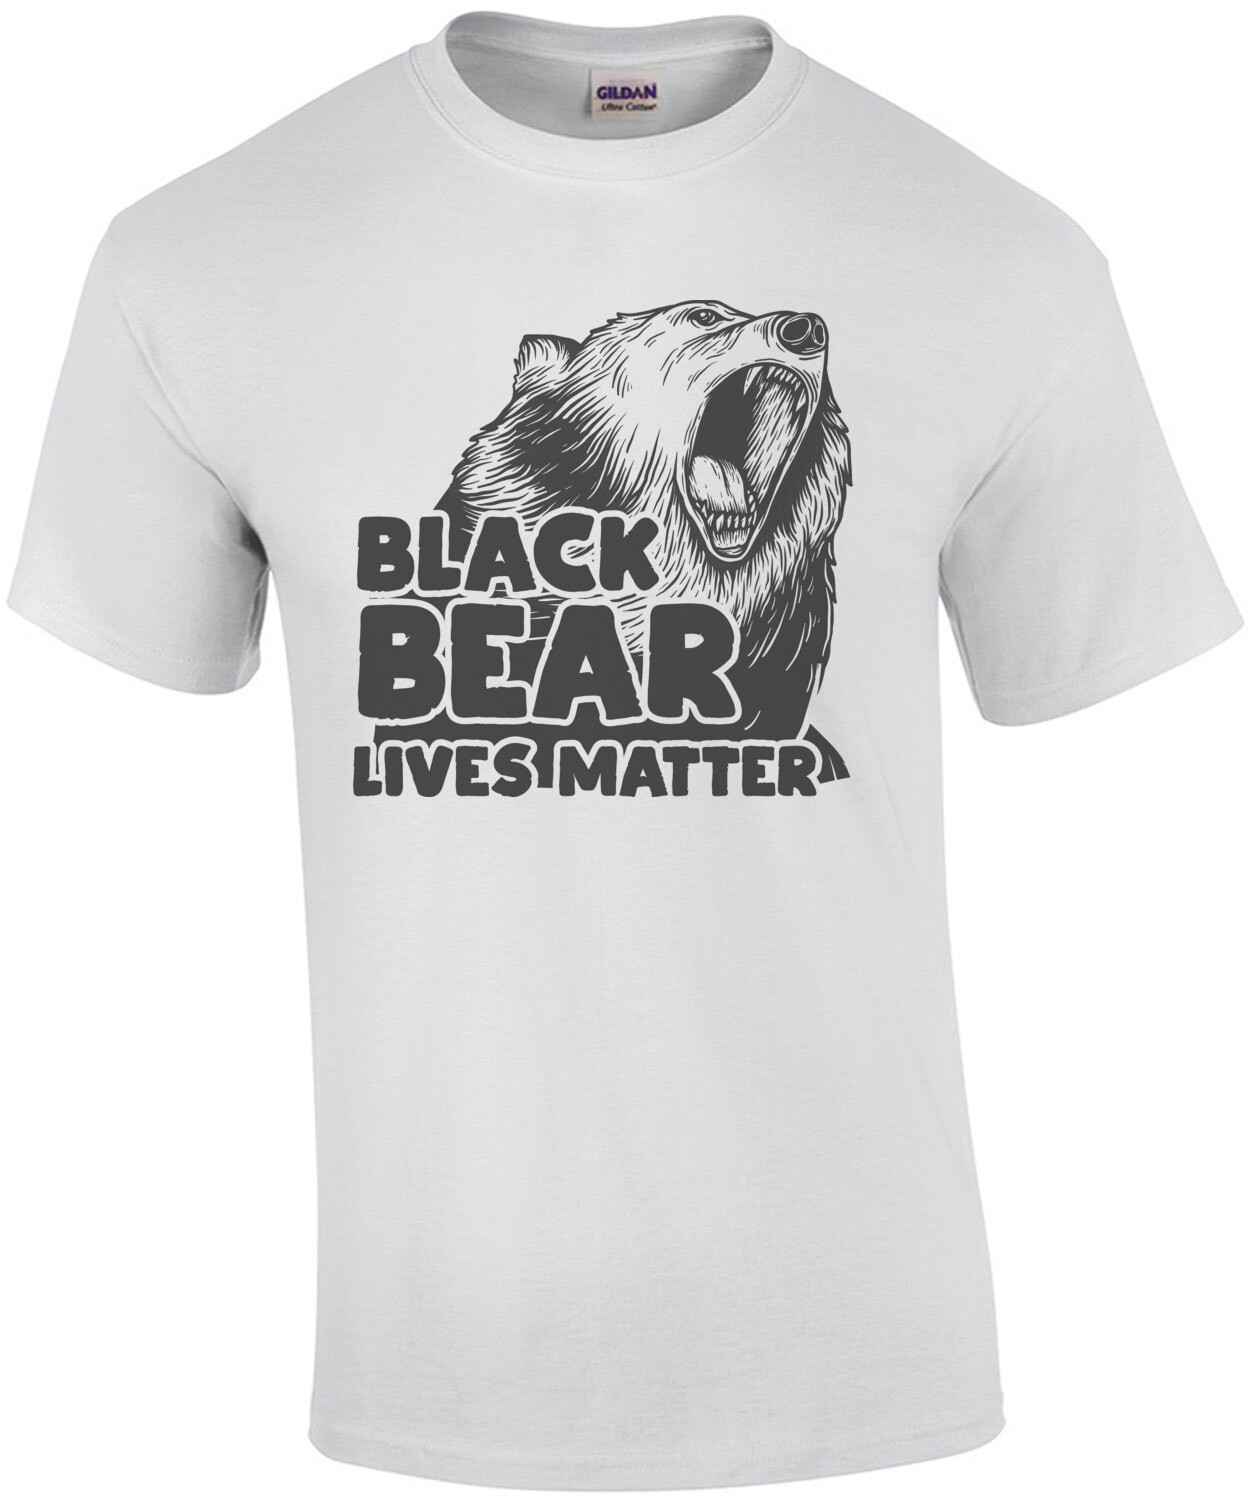 Black Bear Lives Matter - Funny T-Shirt